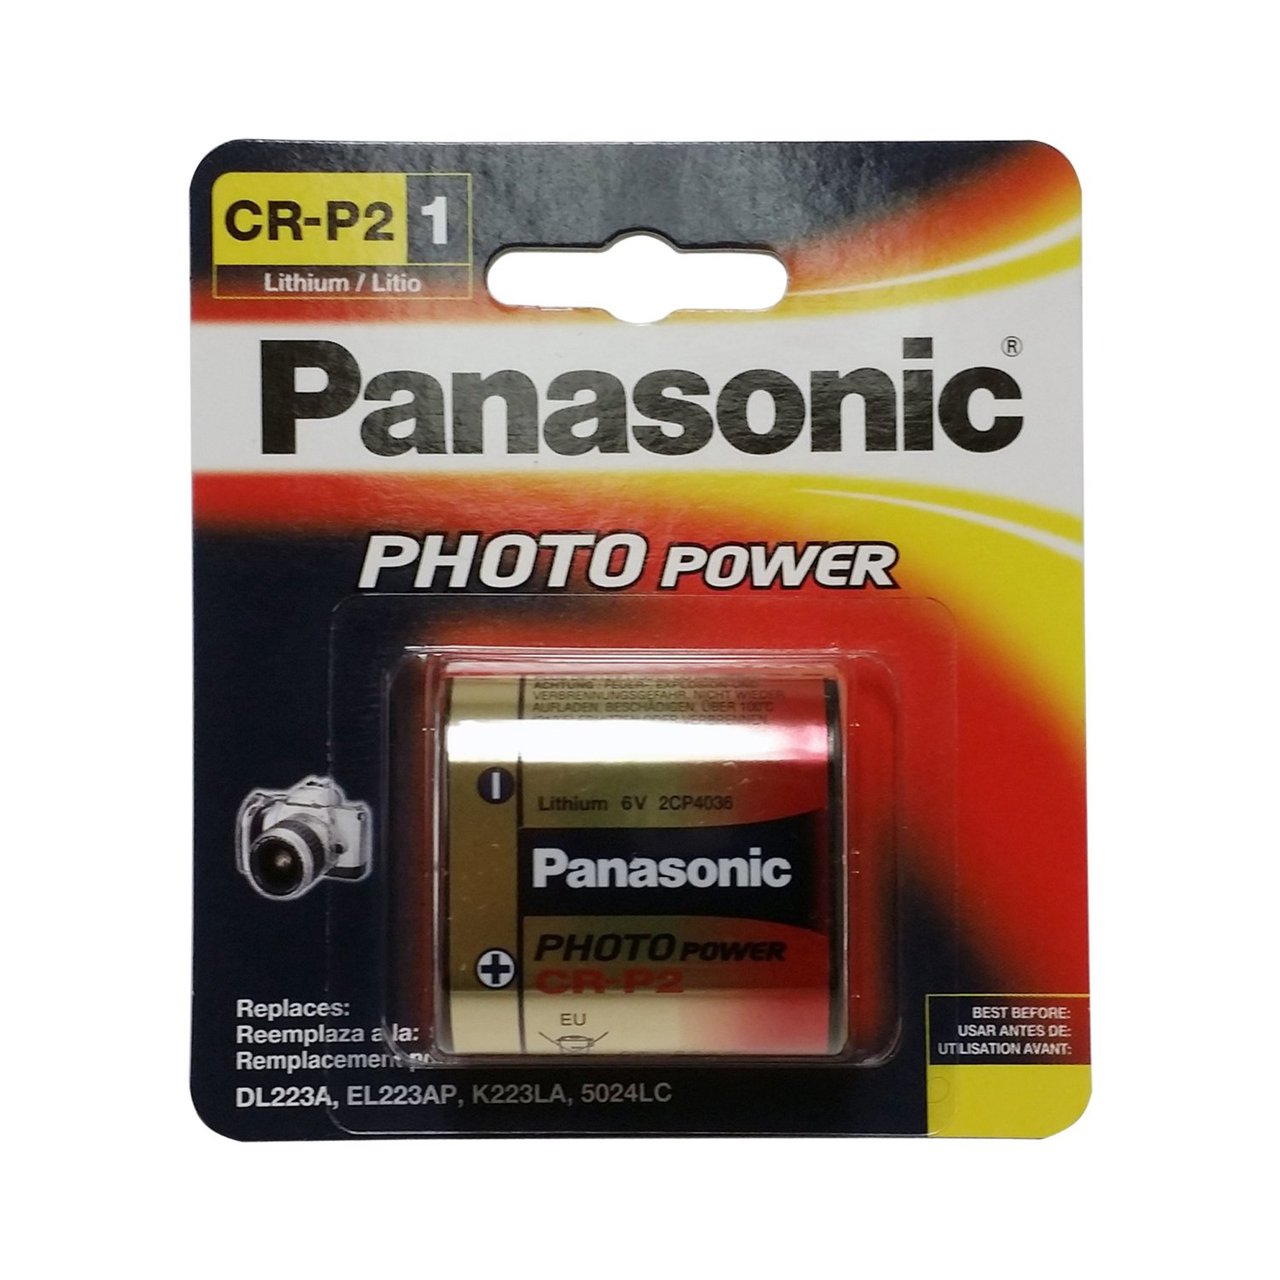 Panasonic CR-P2PA/1B Photo Power CR-P2 Lithium Battery  1 Pack (Gold) + FREE SHIPPING